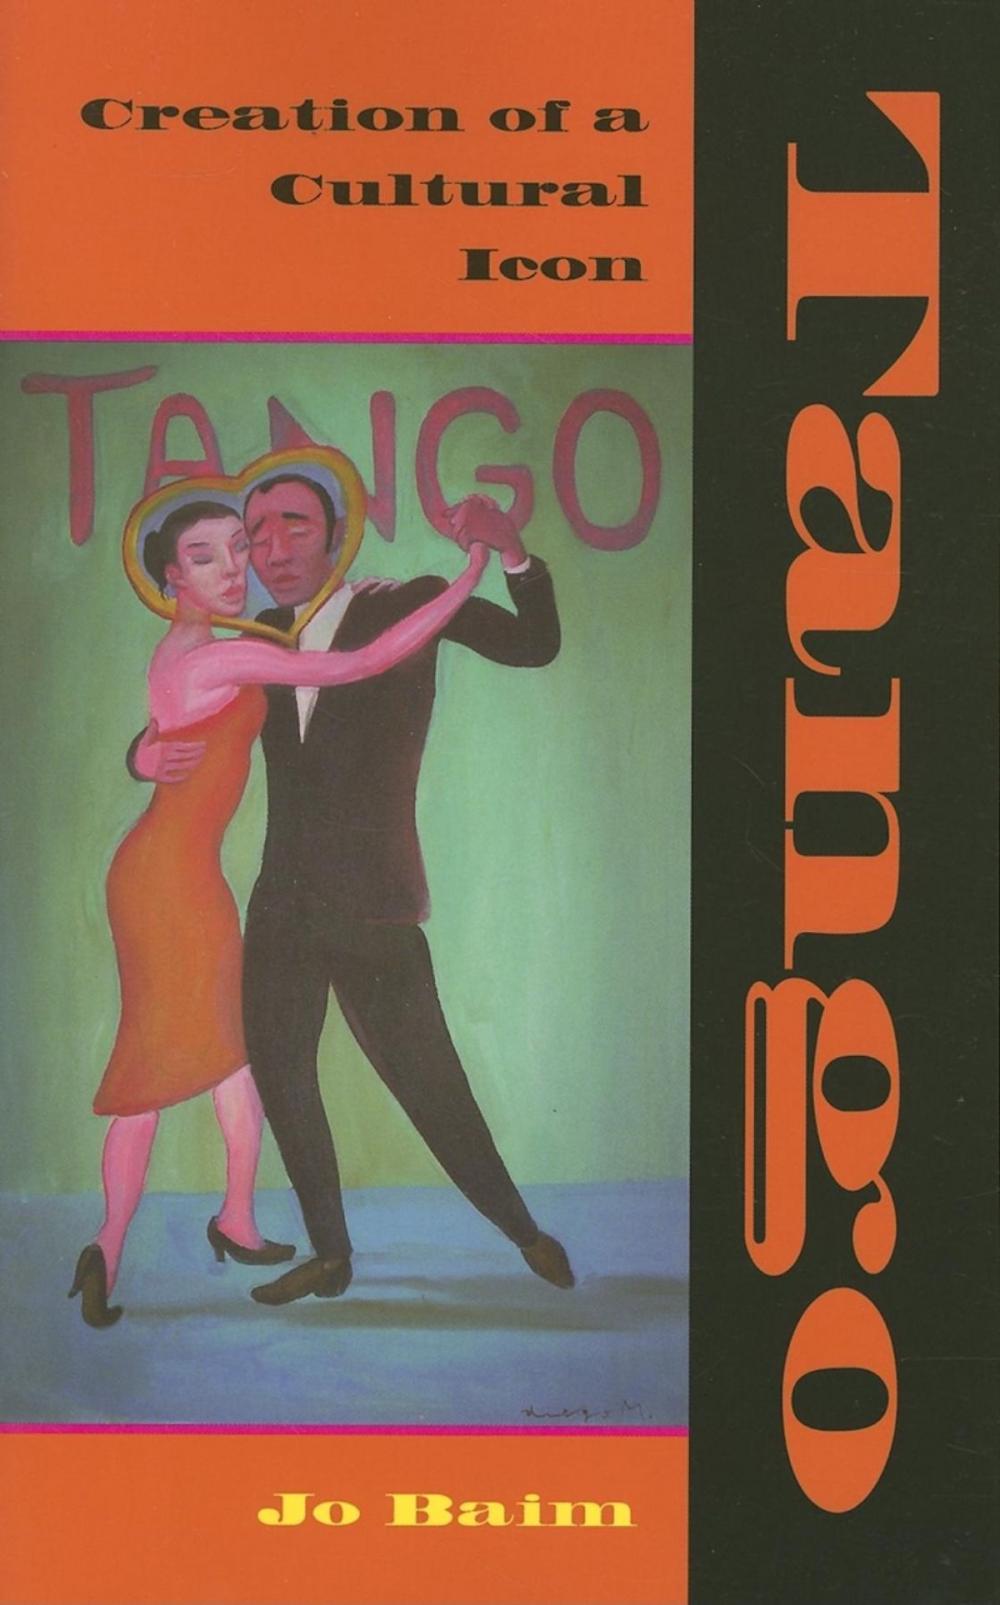 Big bigCover of Tango